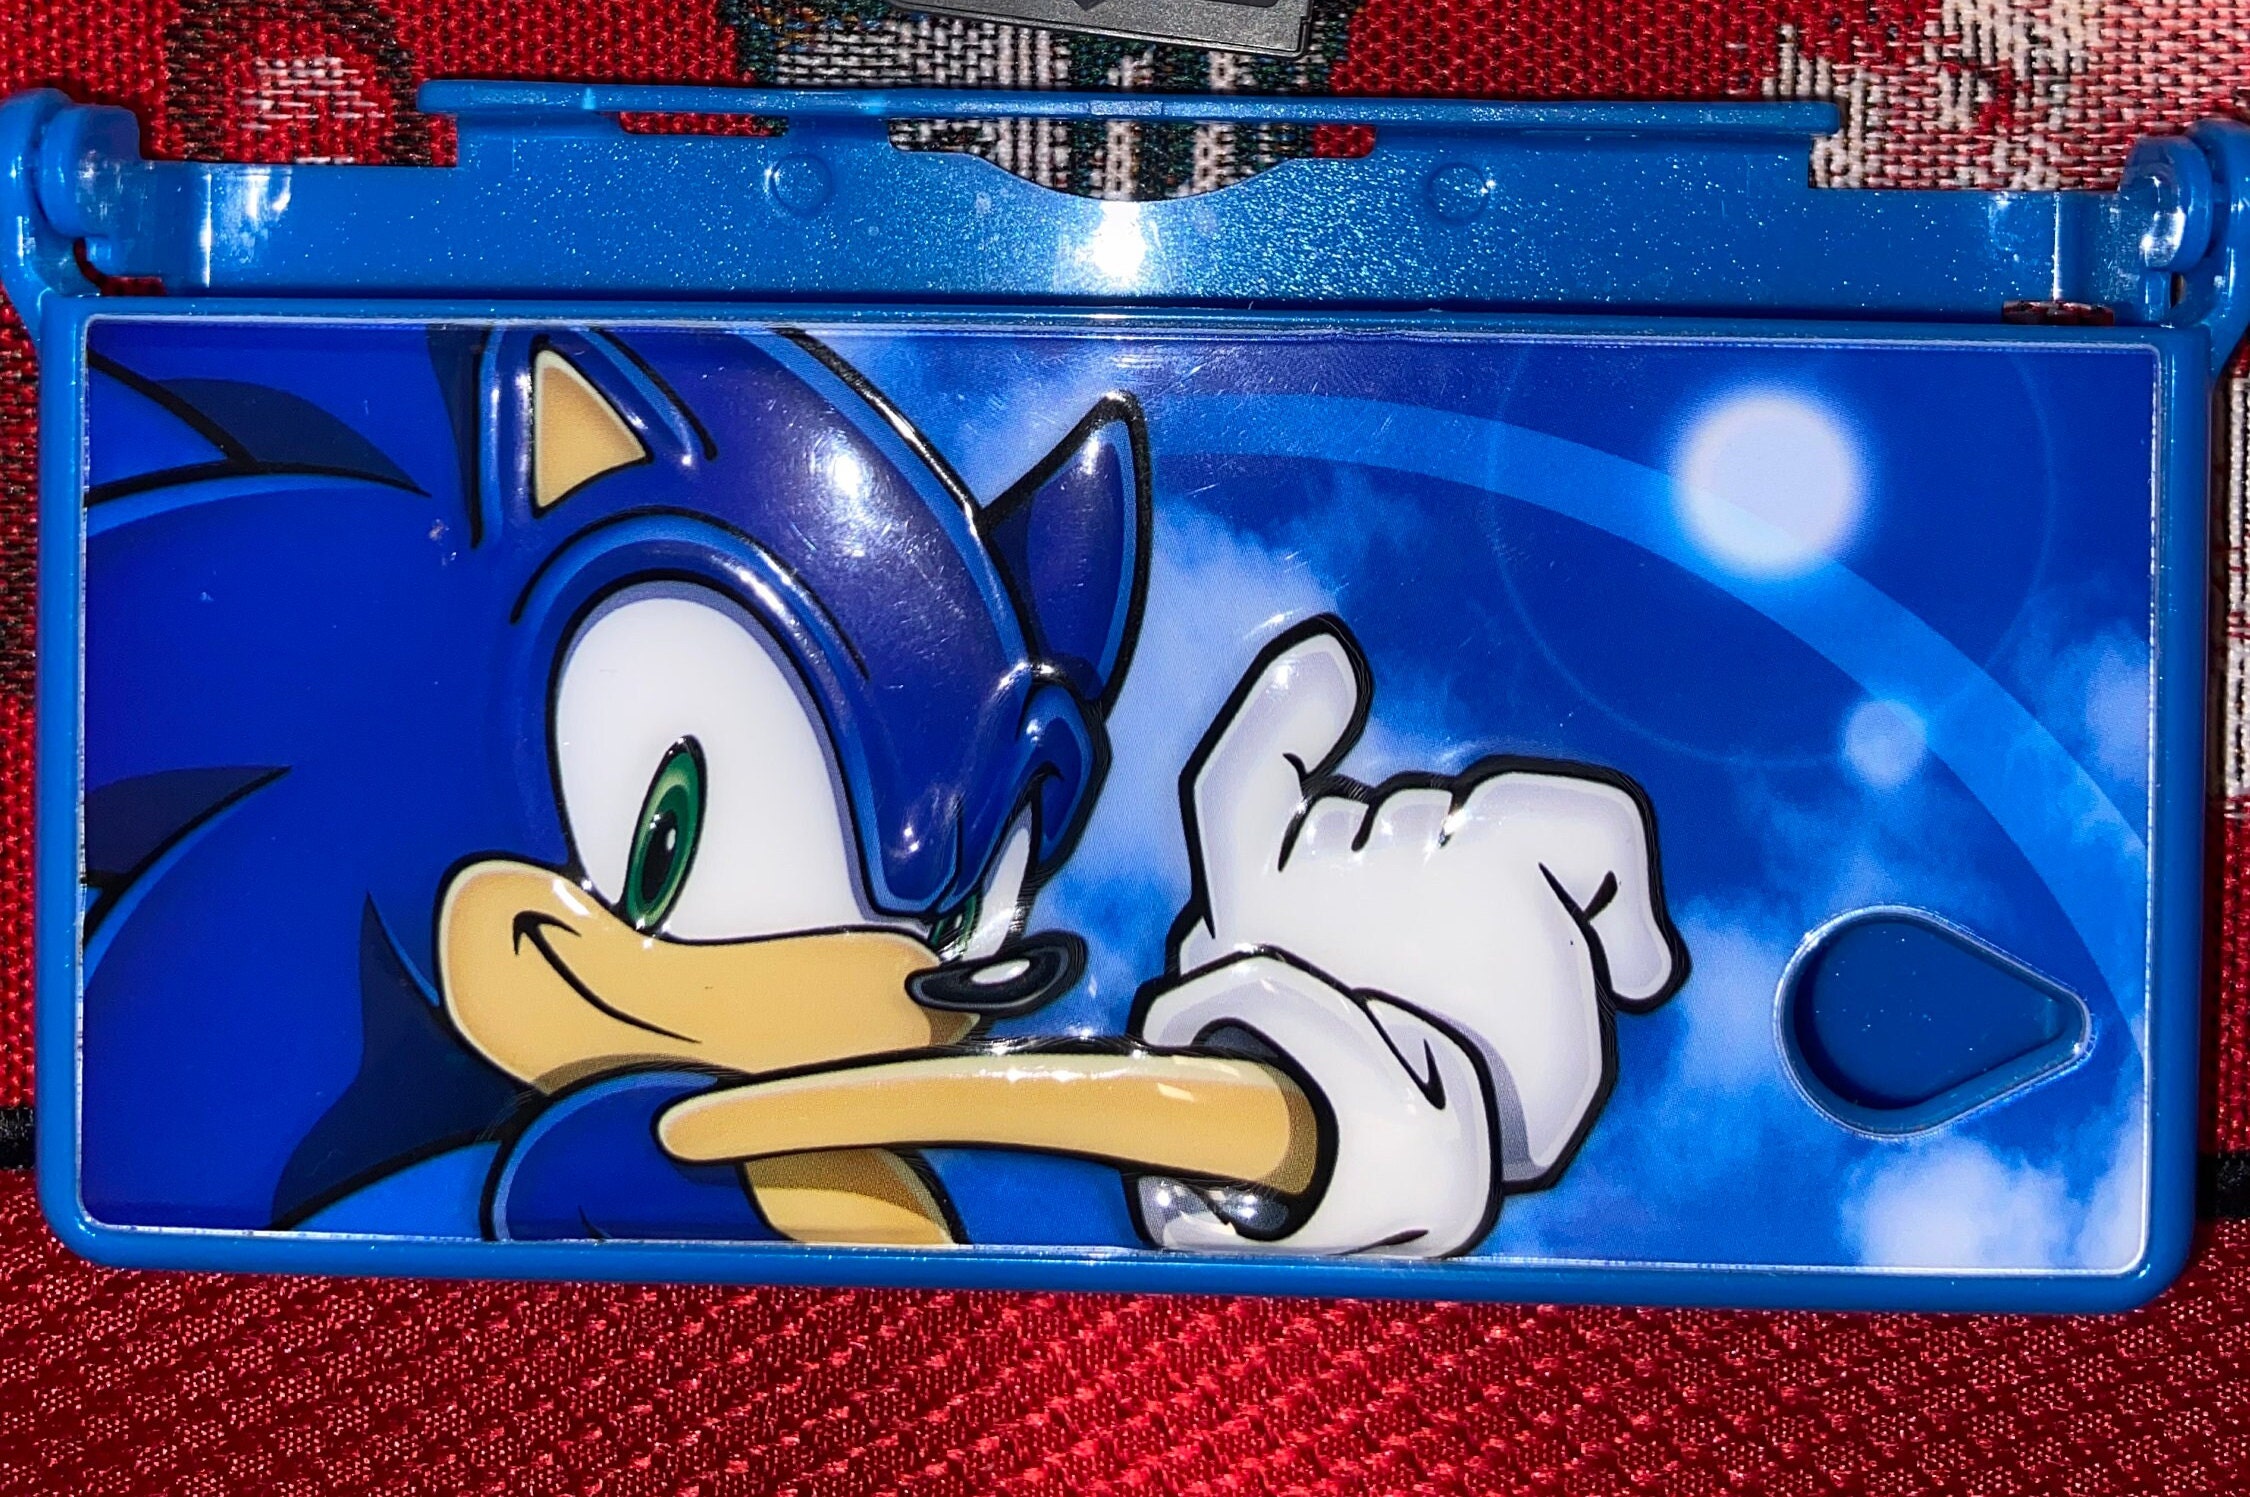 Sonic the Hedgehog 2 (Sega Game Gear) Brand New, Factory Sealed PSA 10 Rare